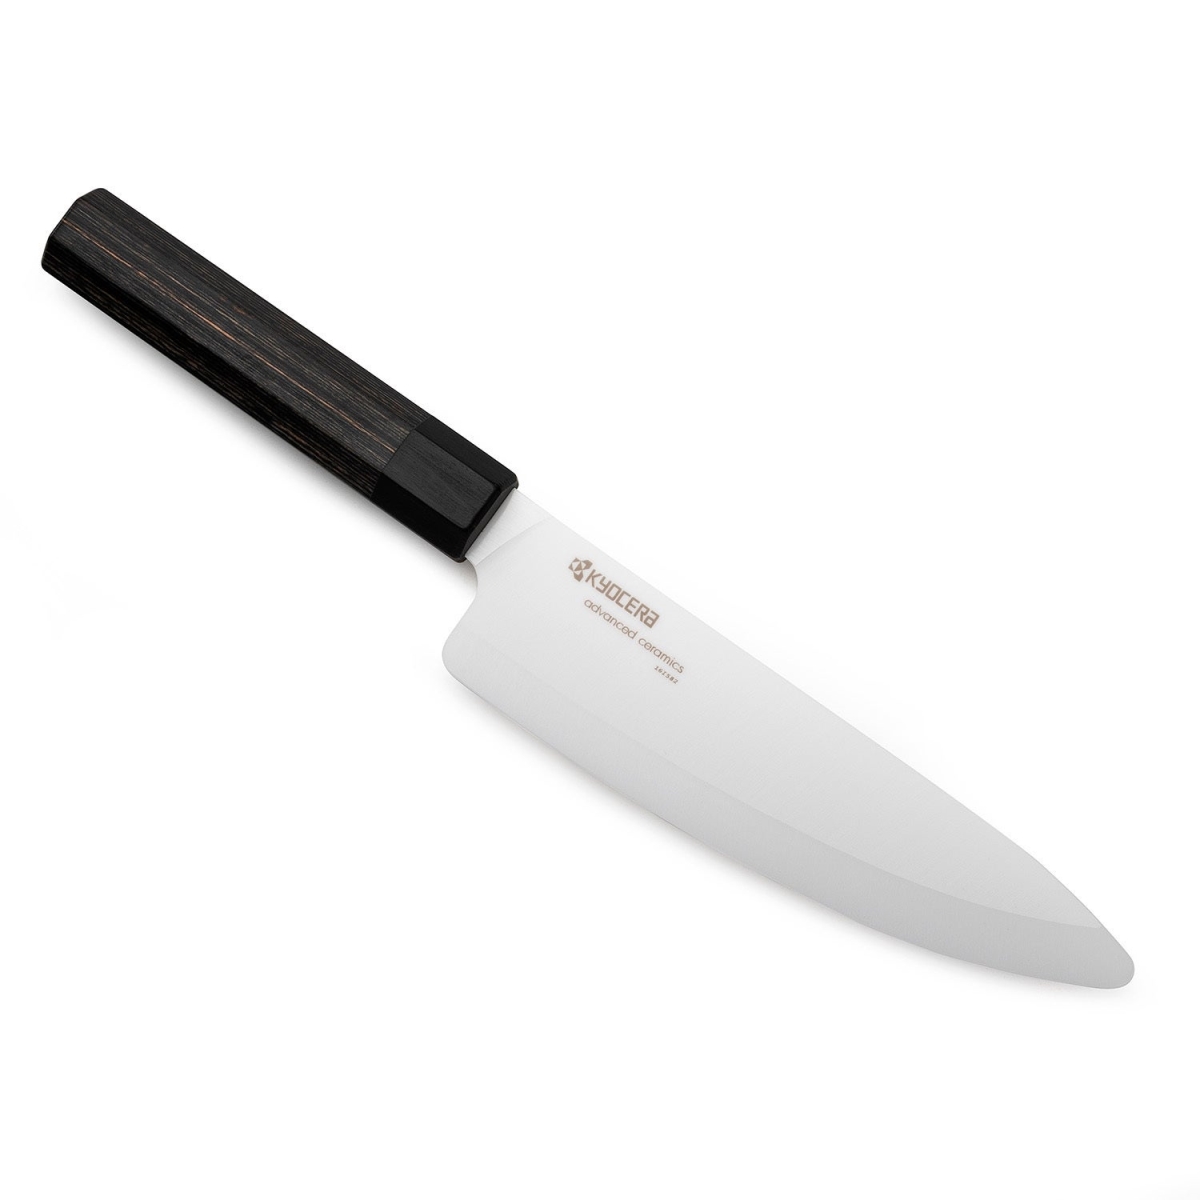 Fj-170wha Fuji Series Chef Knife With Rocker Blade